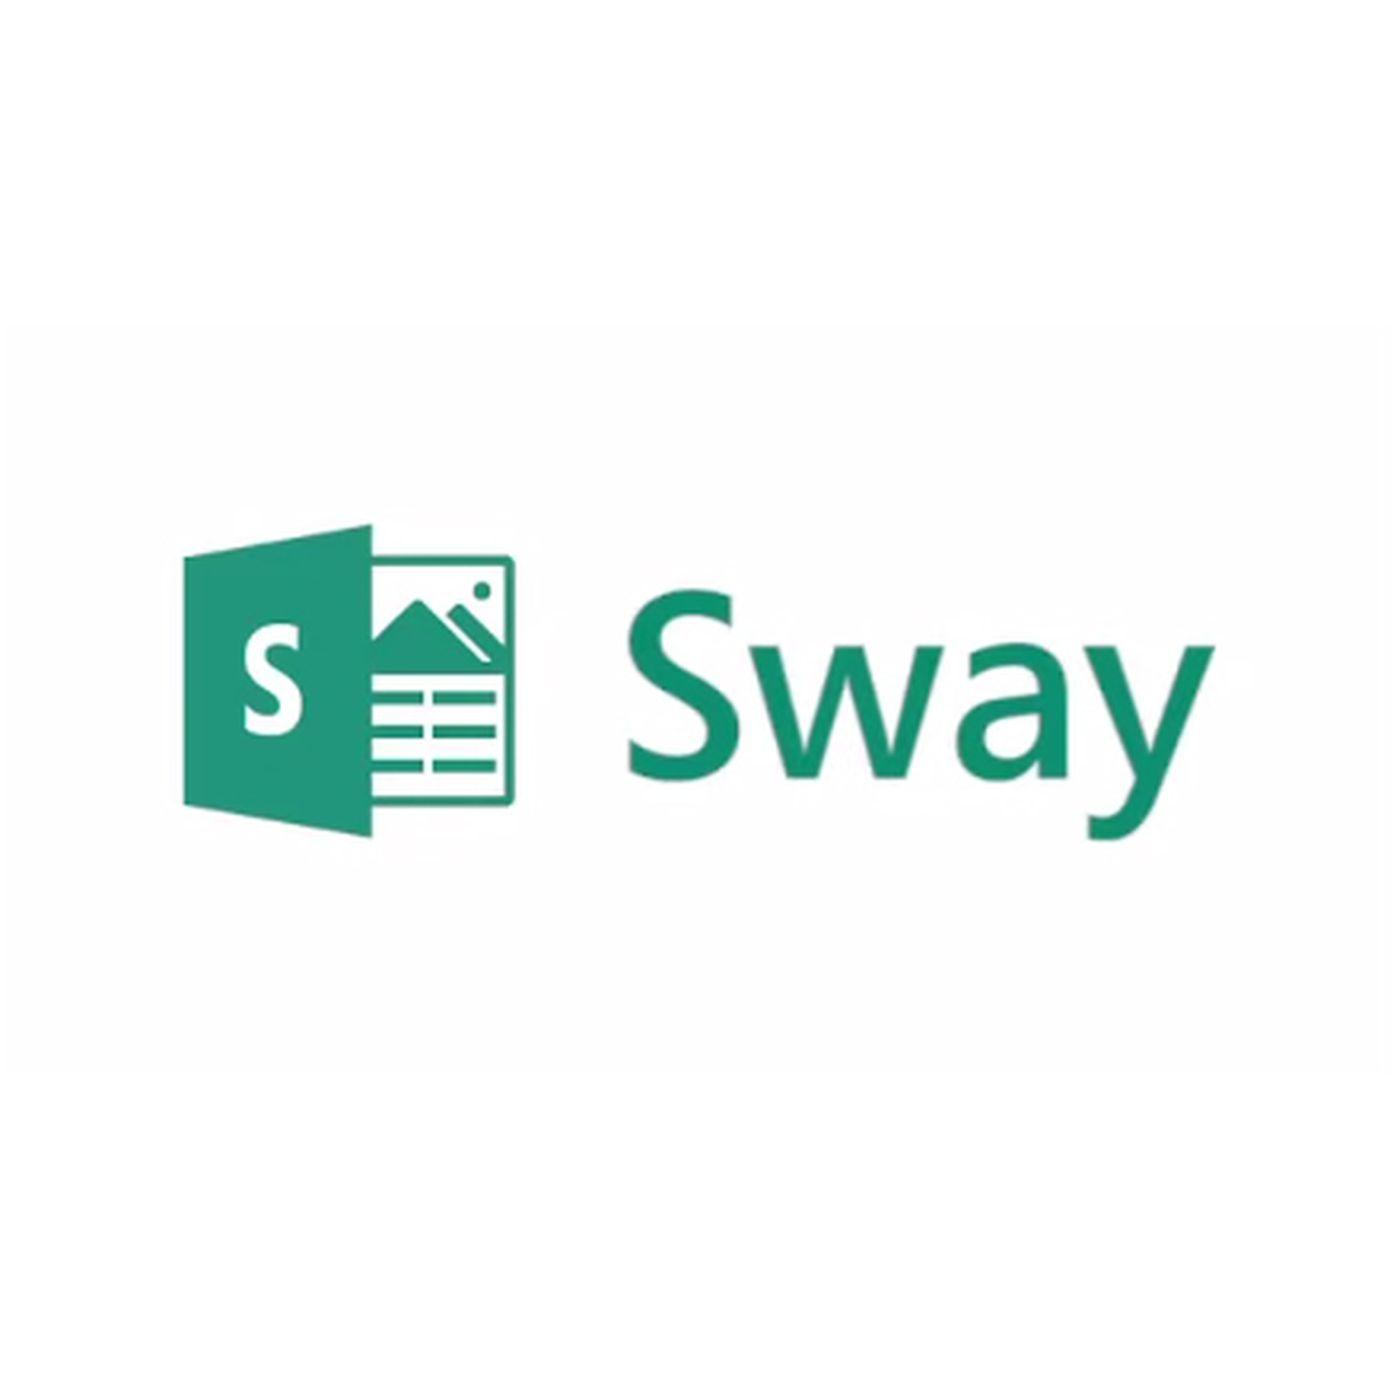 Microsoft Sway Logo - Microsoft's new Sway app is a tool to build elegant websites